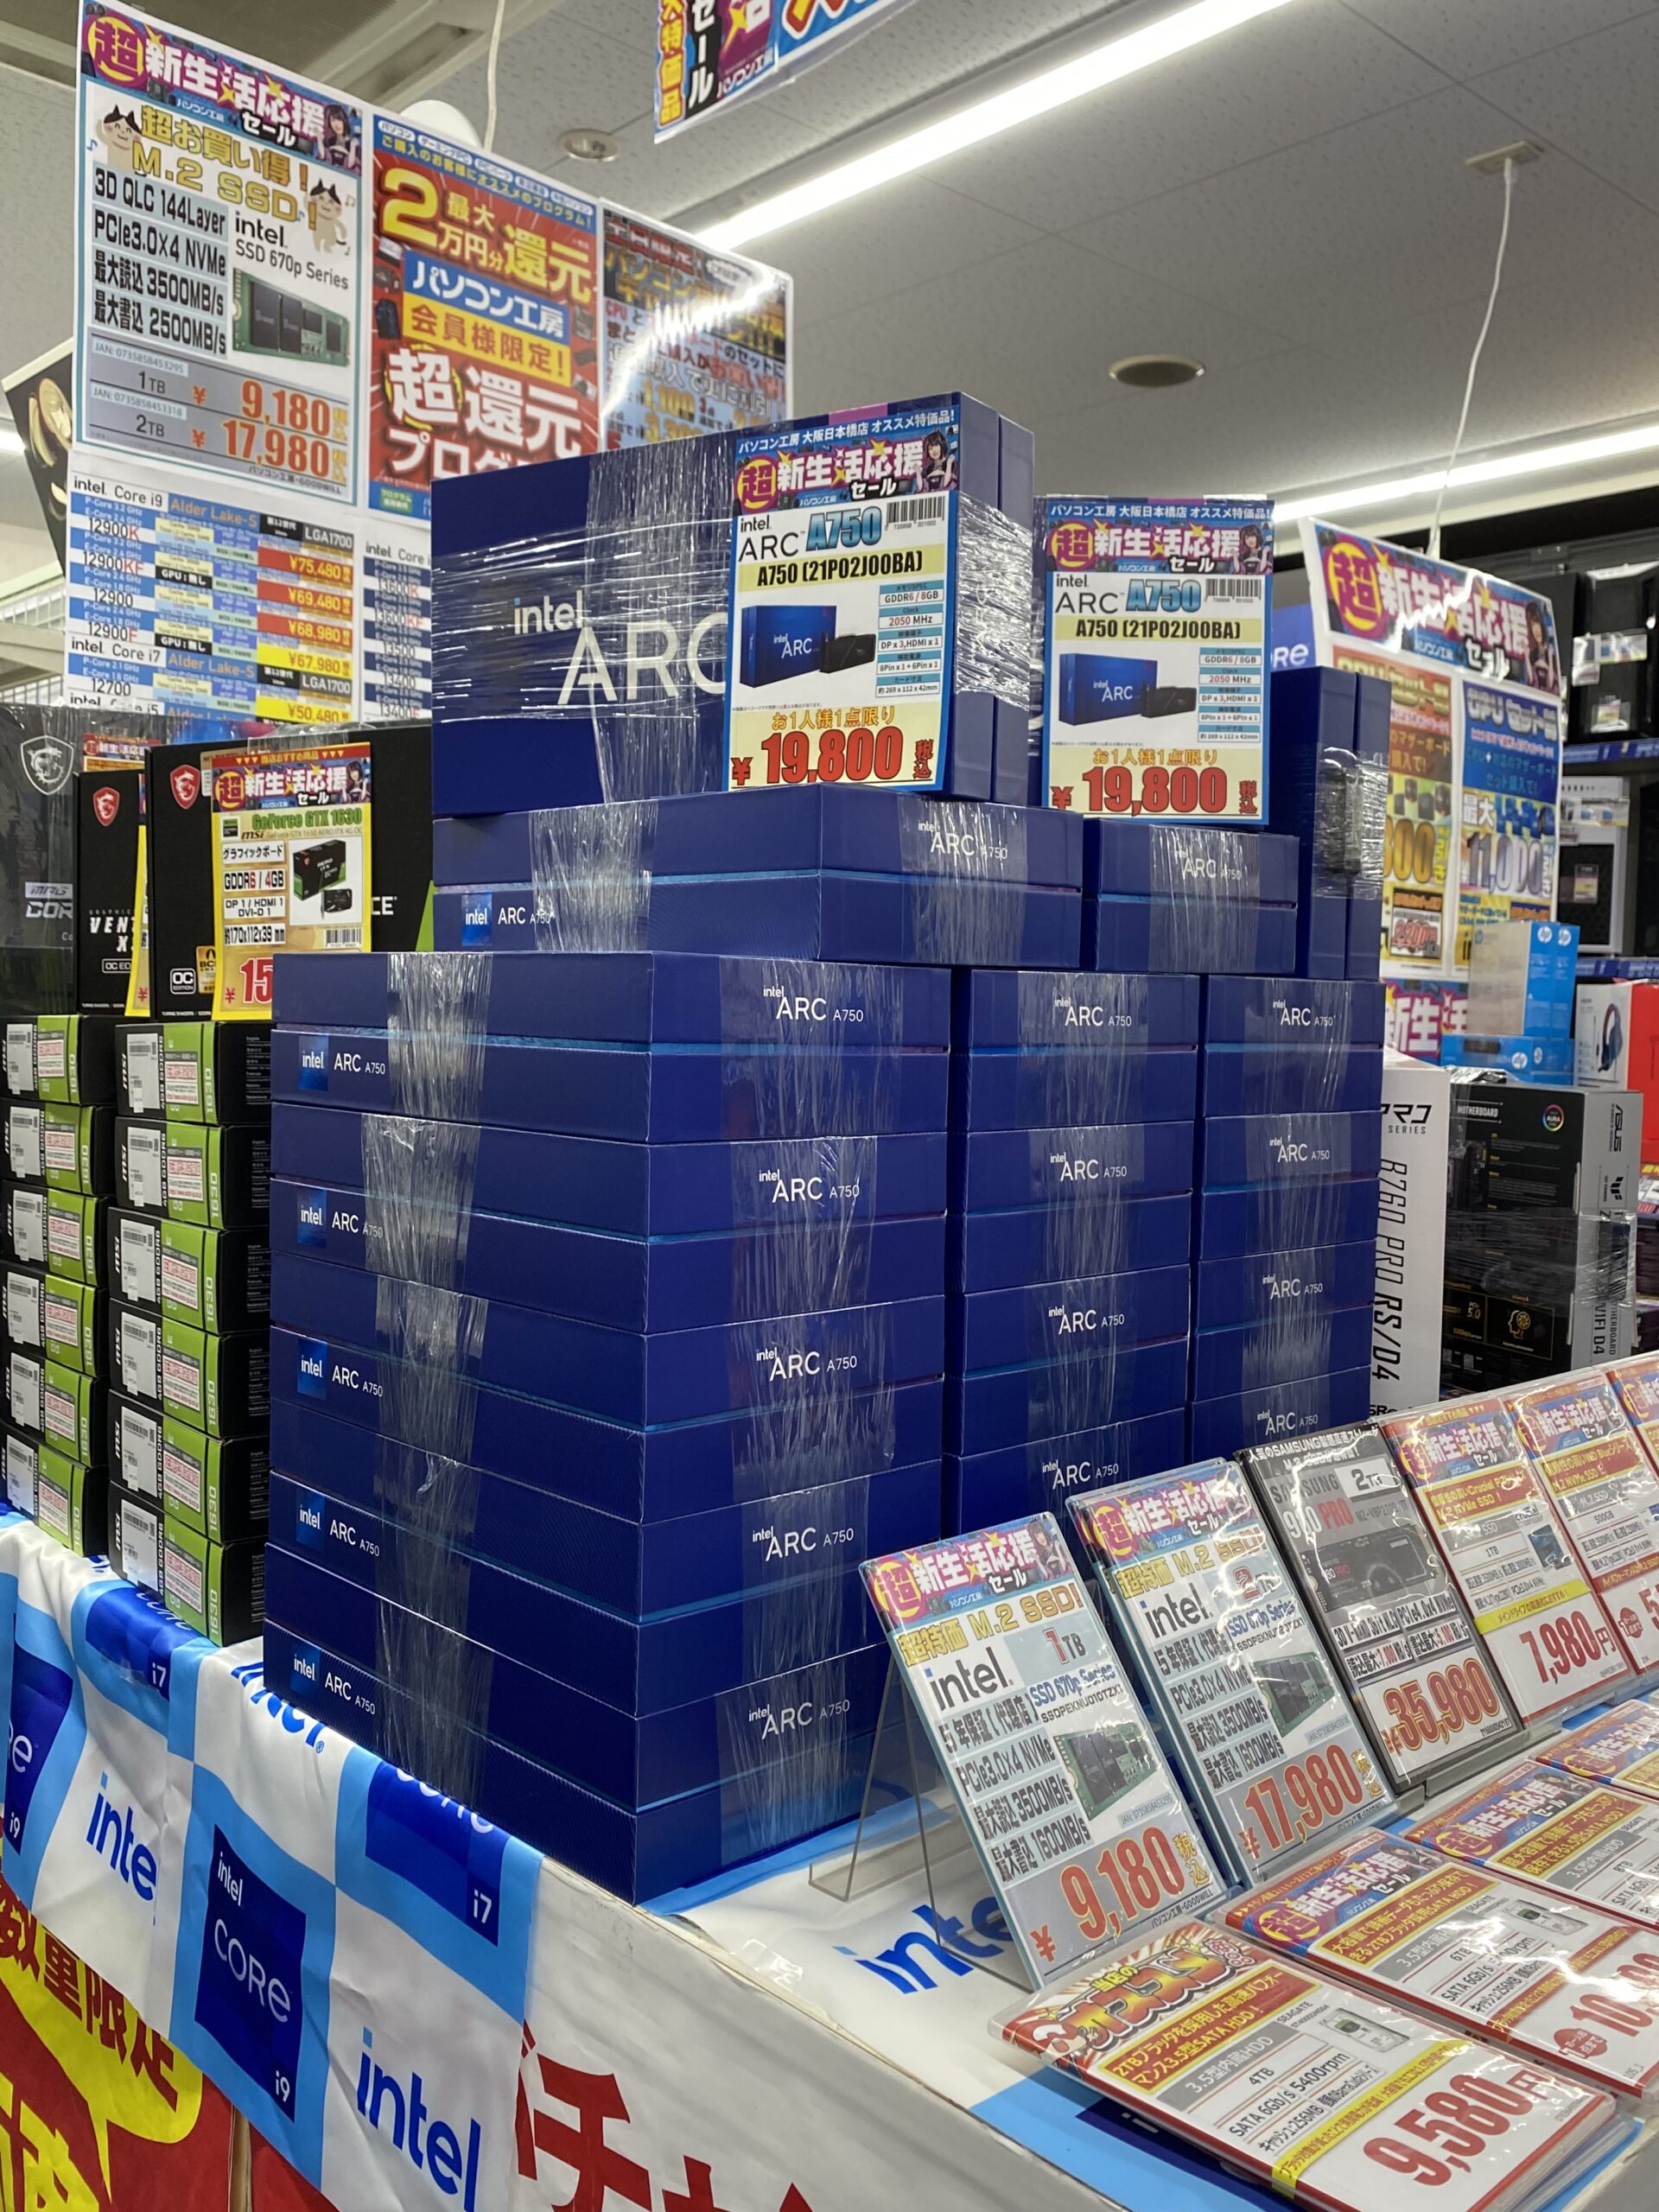 Intel-Arc-A750-150-US-Japanese-Retailer-scaled.jpg